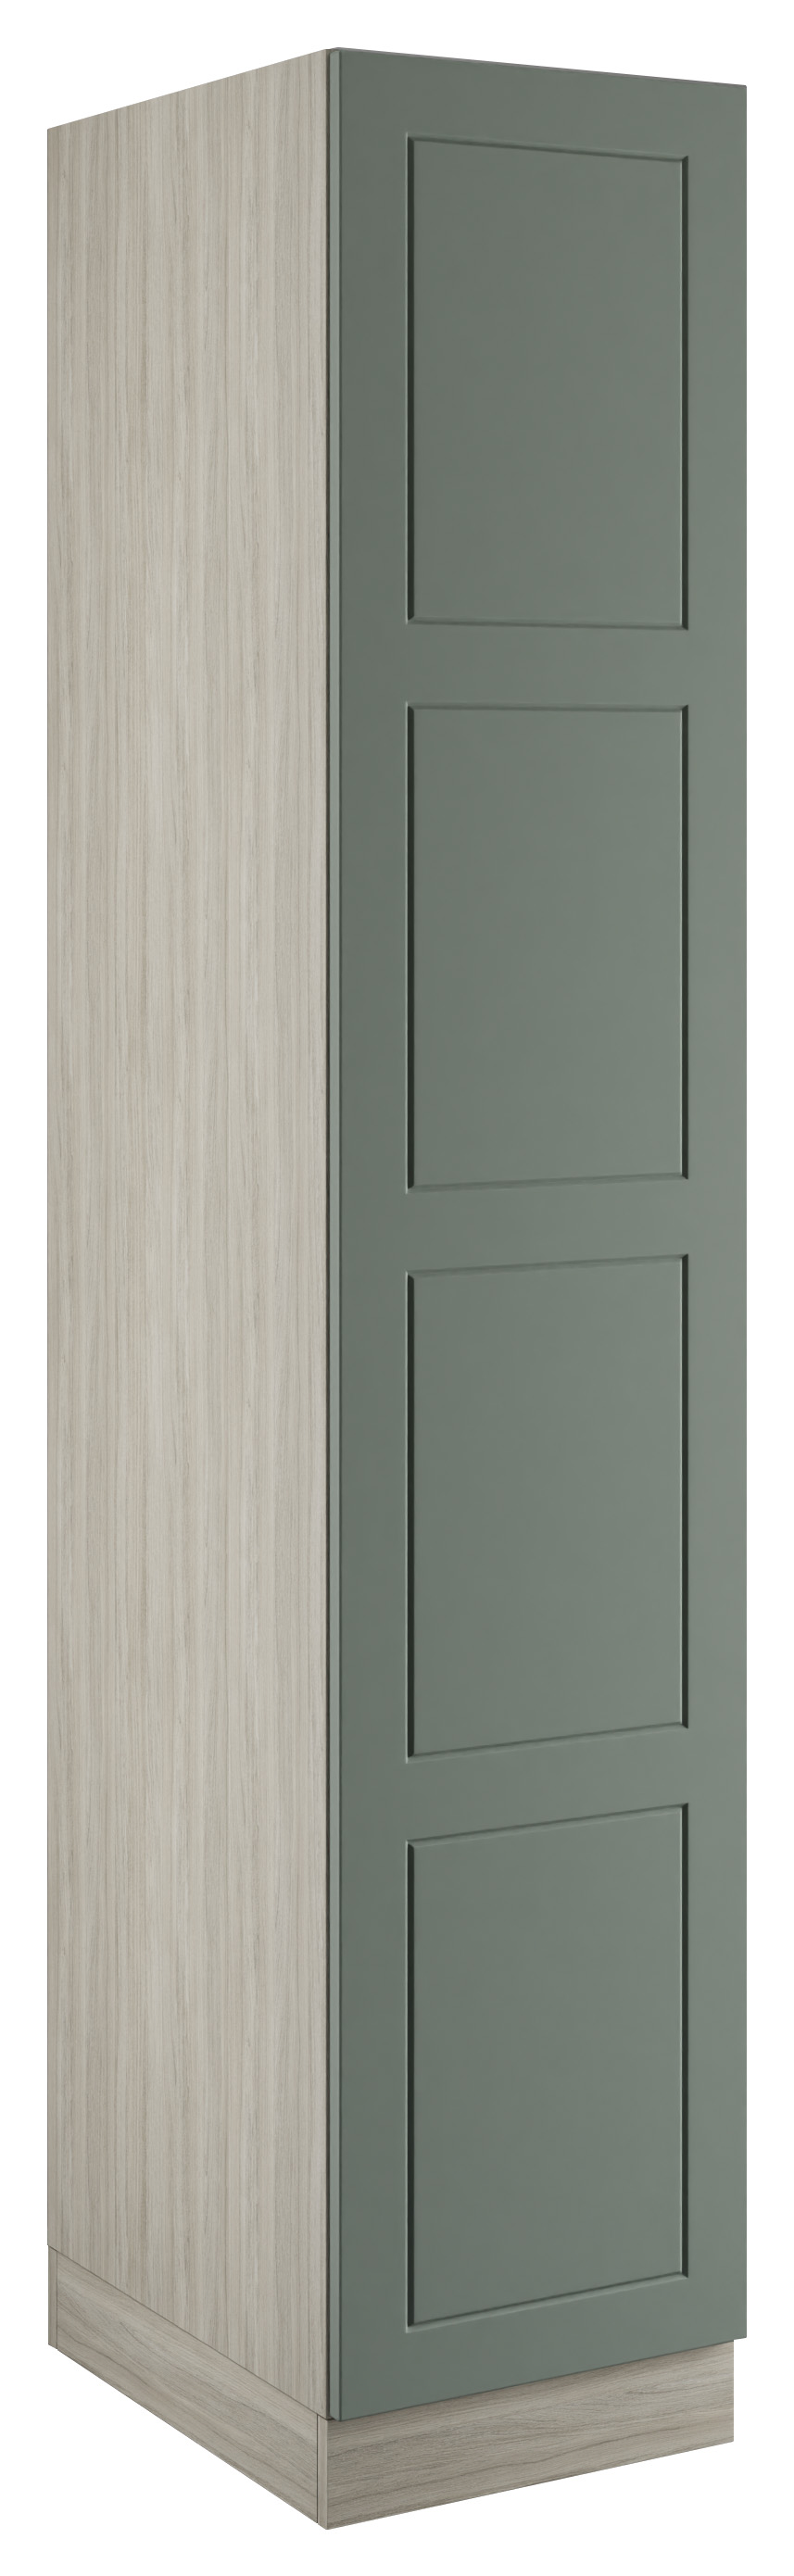 Bramham Sage Green Single Wardrobe with Double Rail - 450 x 2260 x 608mm